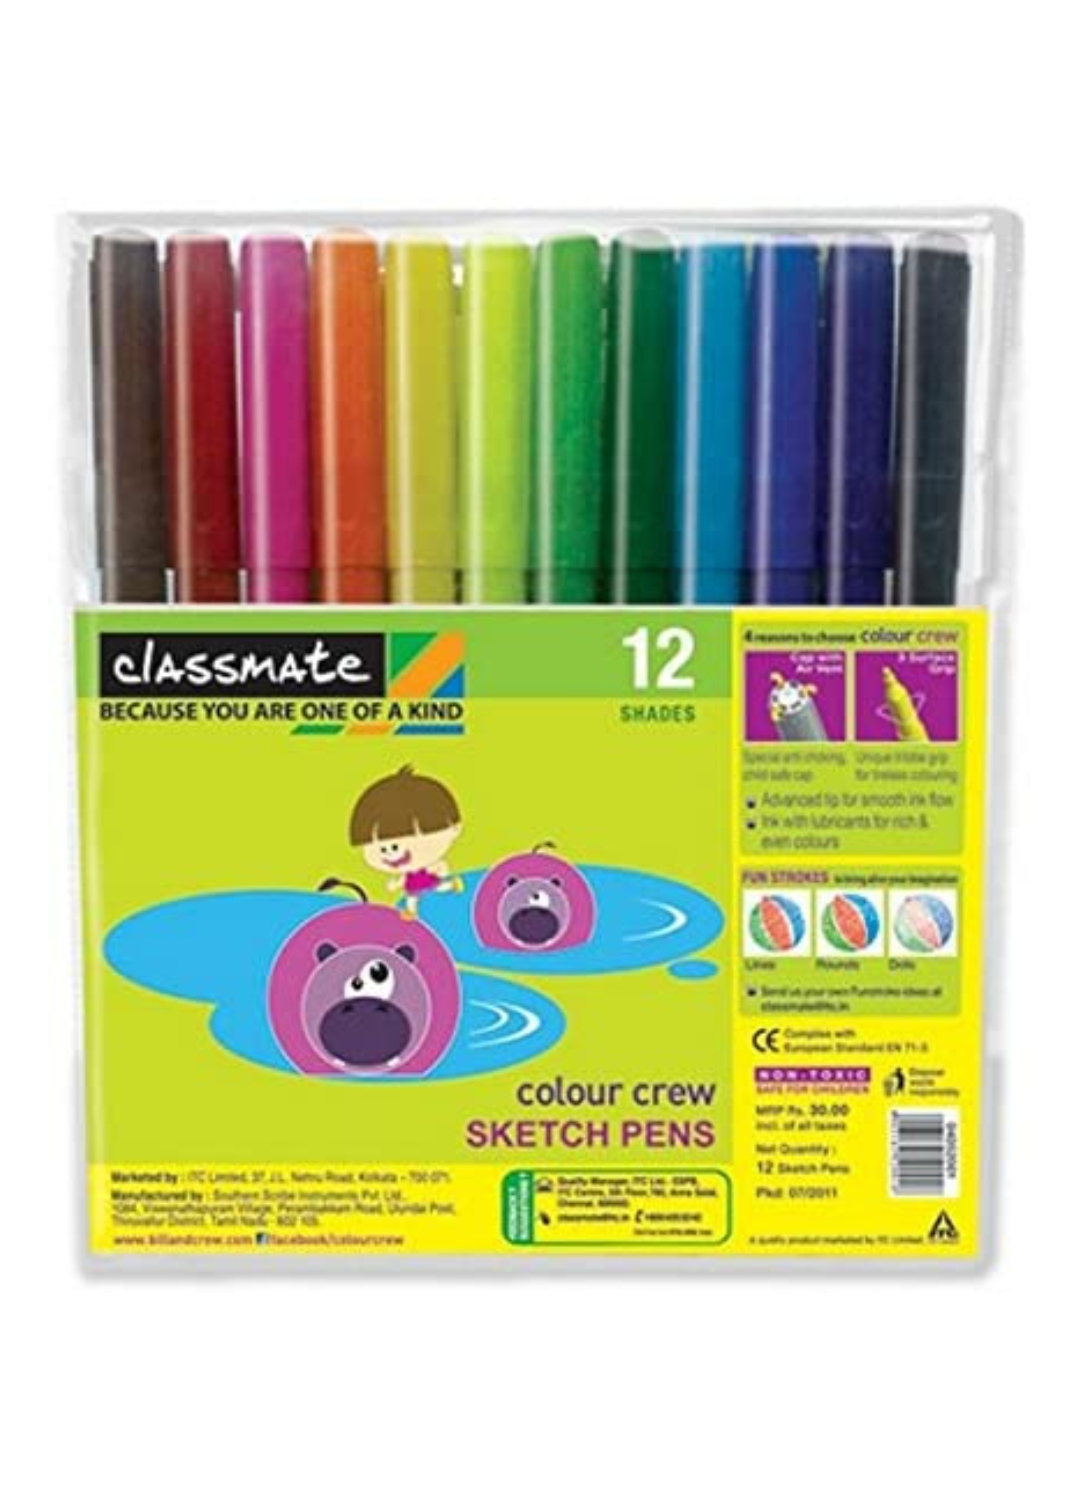 Classmate Colour Crew Sketch Pens 12 Shades